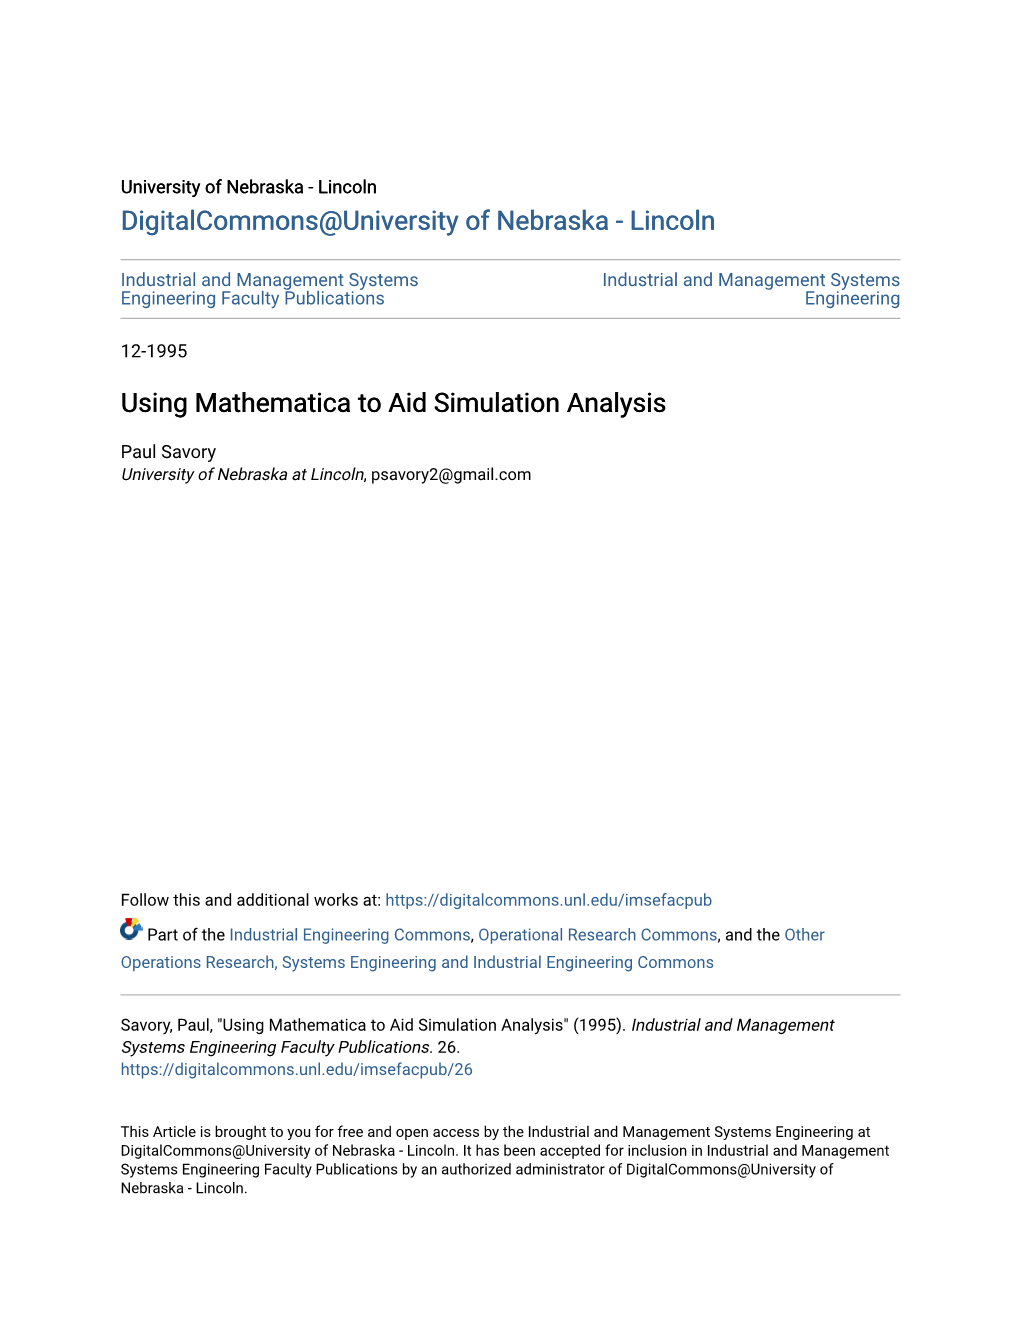 Using Mathematica to Aid Simulation Analysis